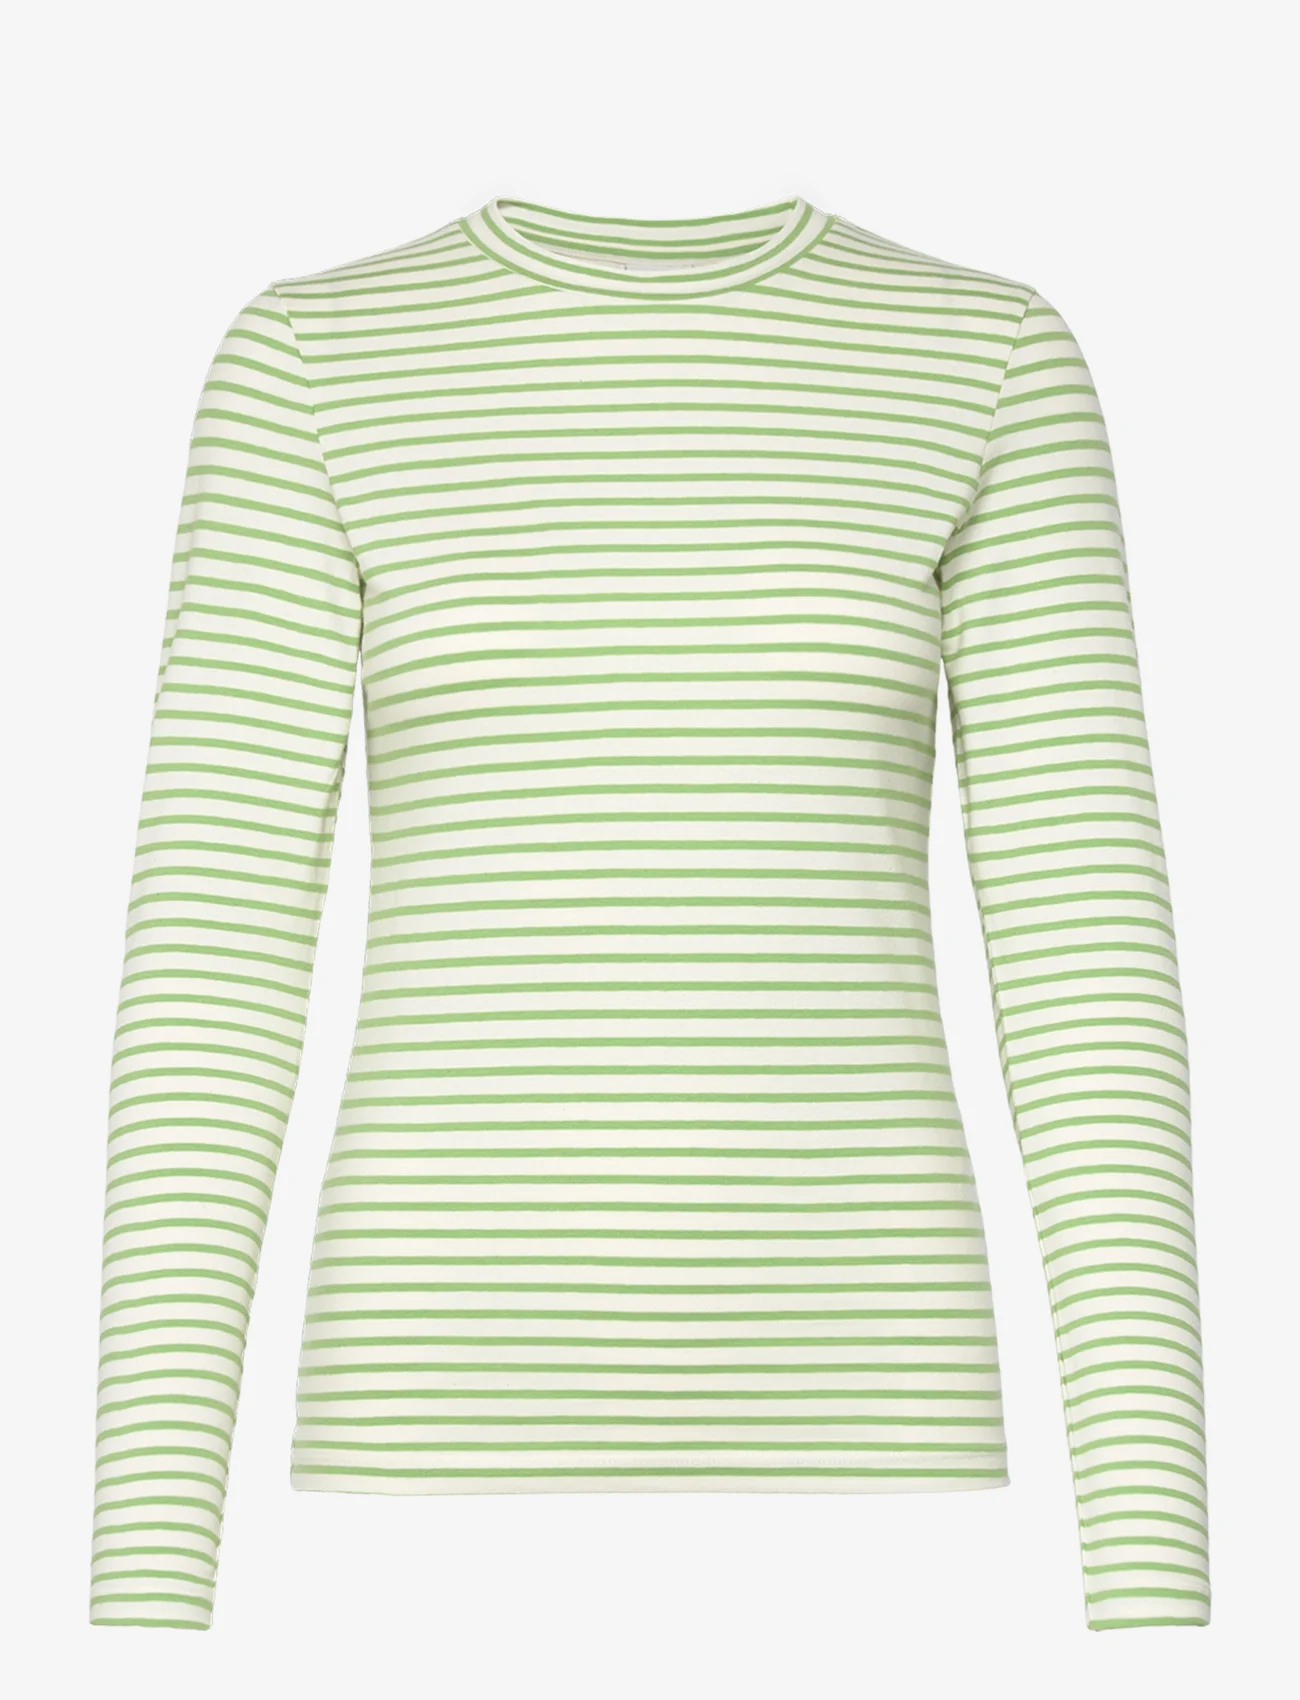 ICHI - IHMIRA LS - pitkähihaiset paidat - green tea stripe - 0